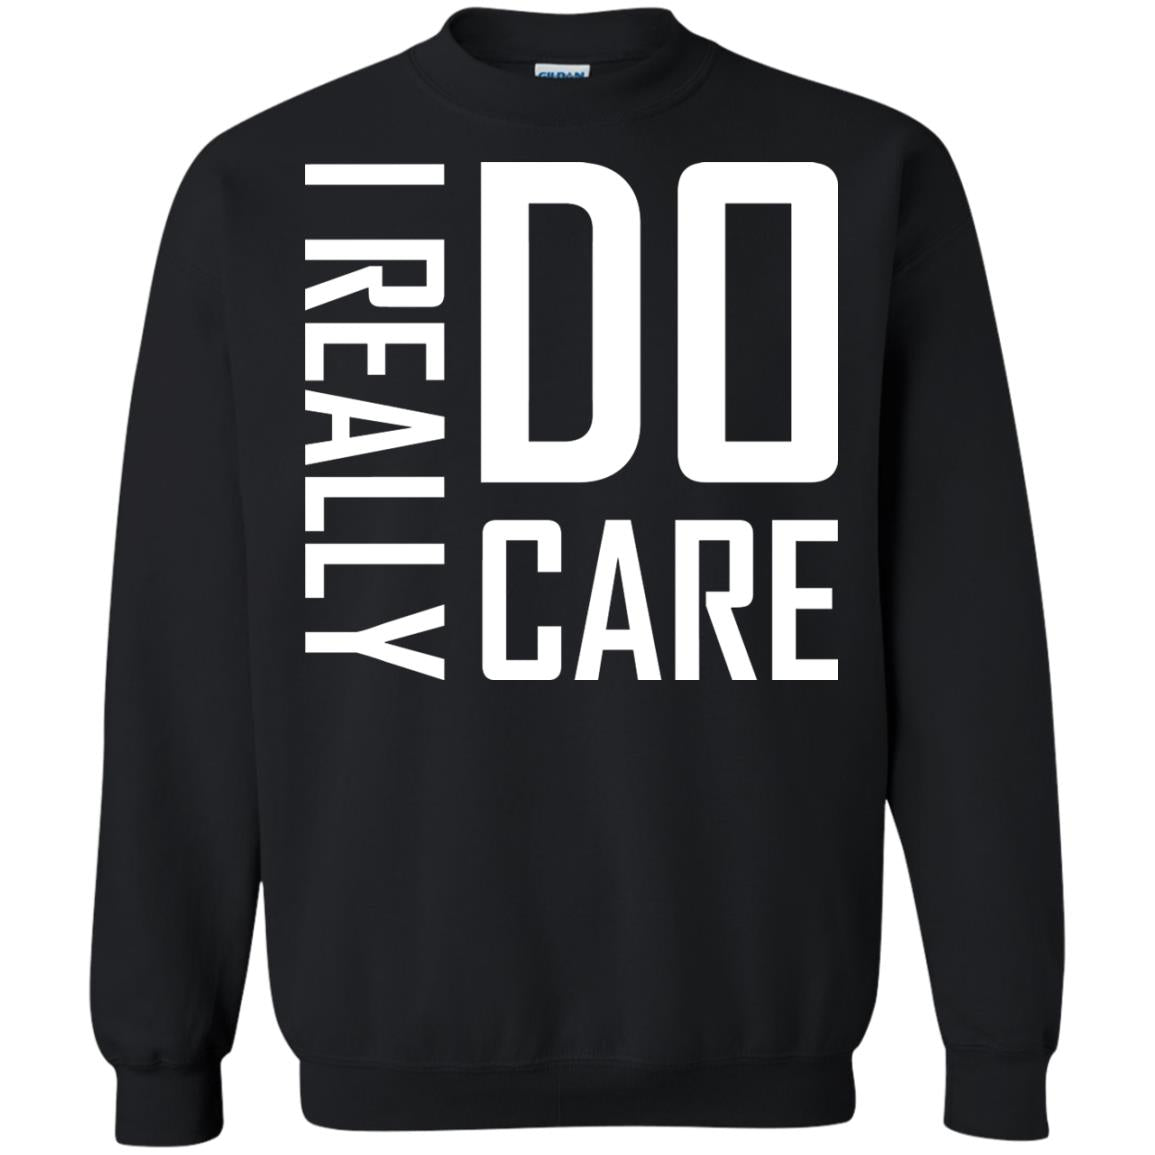 I Really Do Care Hot Saying 2018 ShirtG180 Gildan Crewneck Pullover Sweatshirt 8 oz.